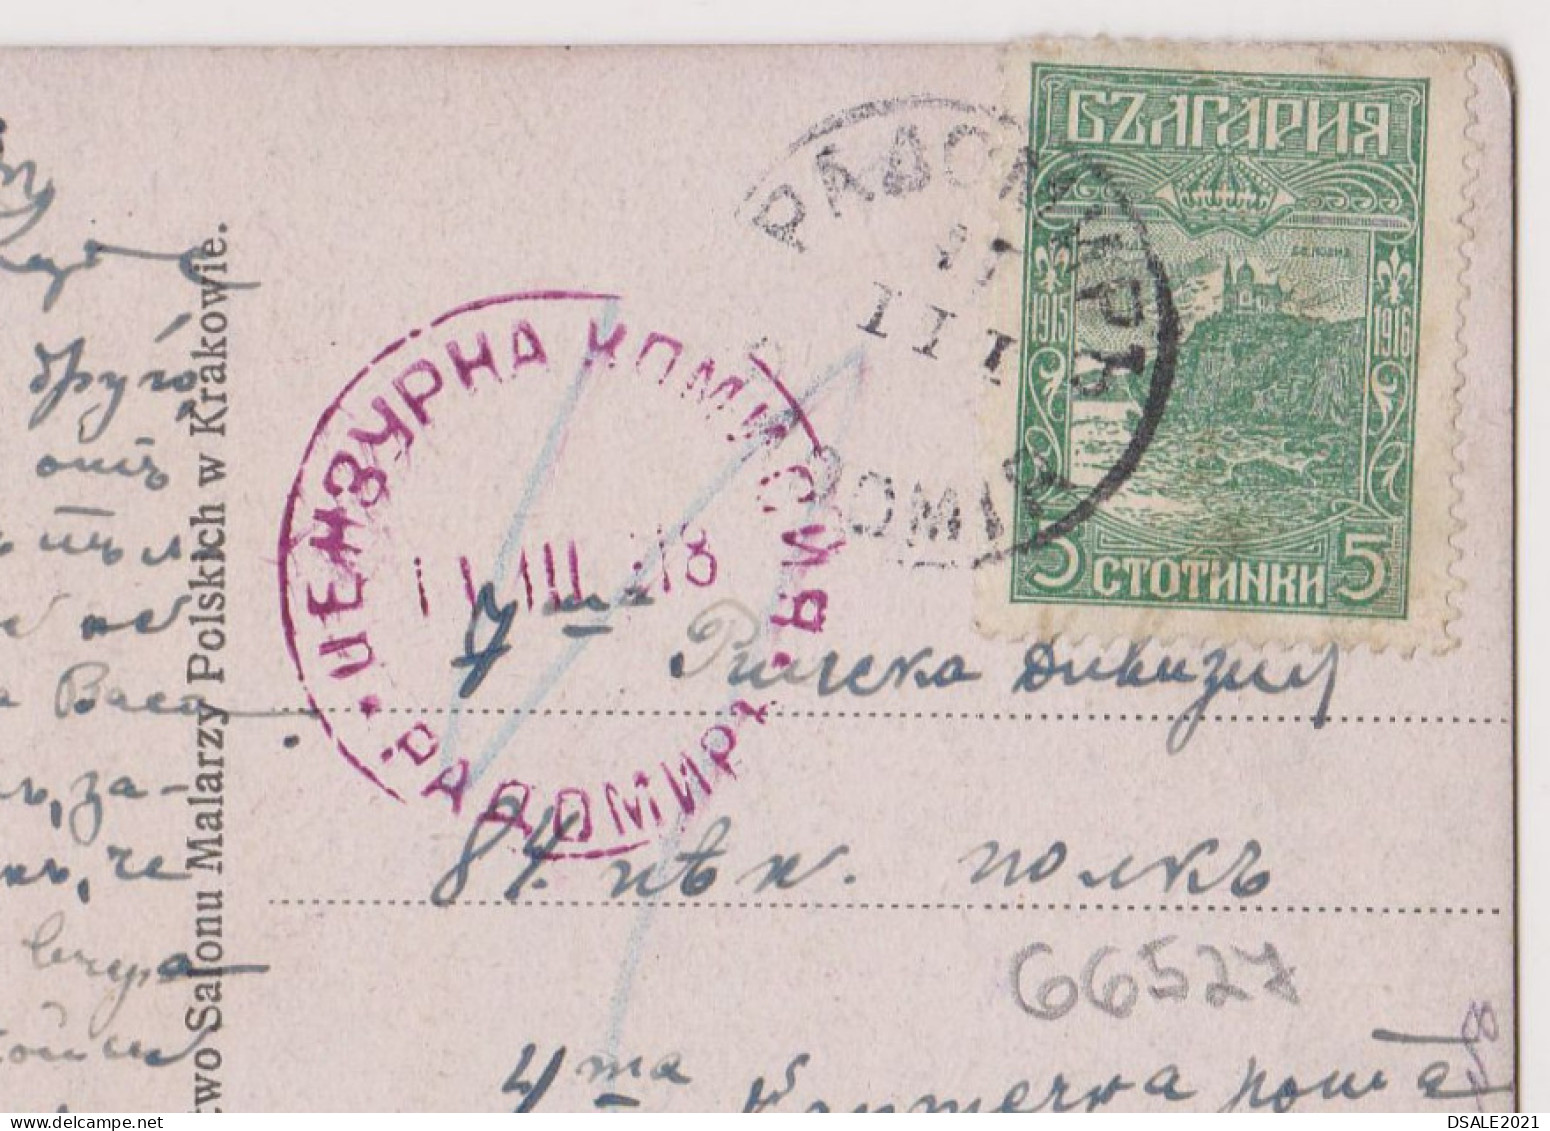 Bulgaria Bulgarien Ww1-1918 Civil Censored RADOMIR Cachet Artist Postcard By K. Szczawinski Boy W/Violin Postcard /66527 - War